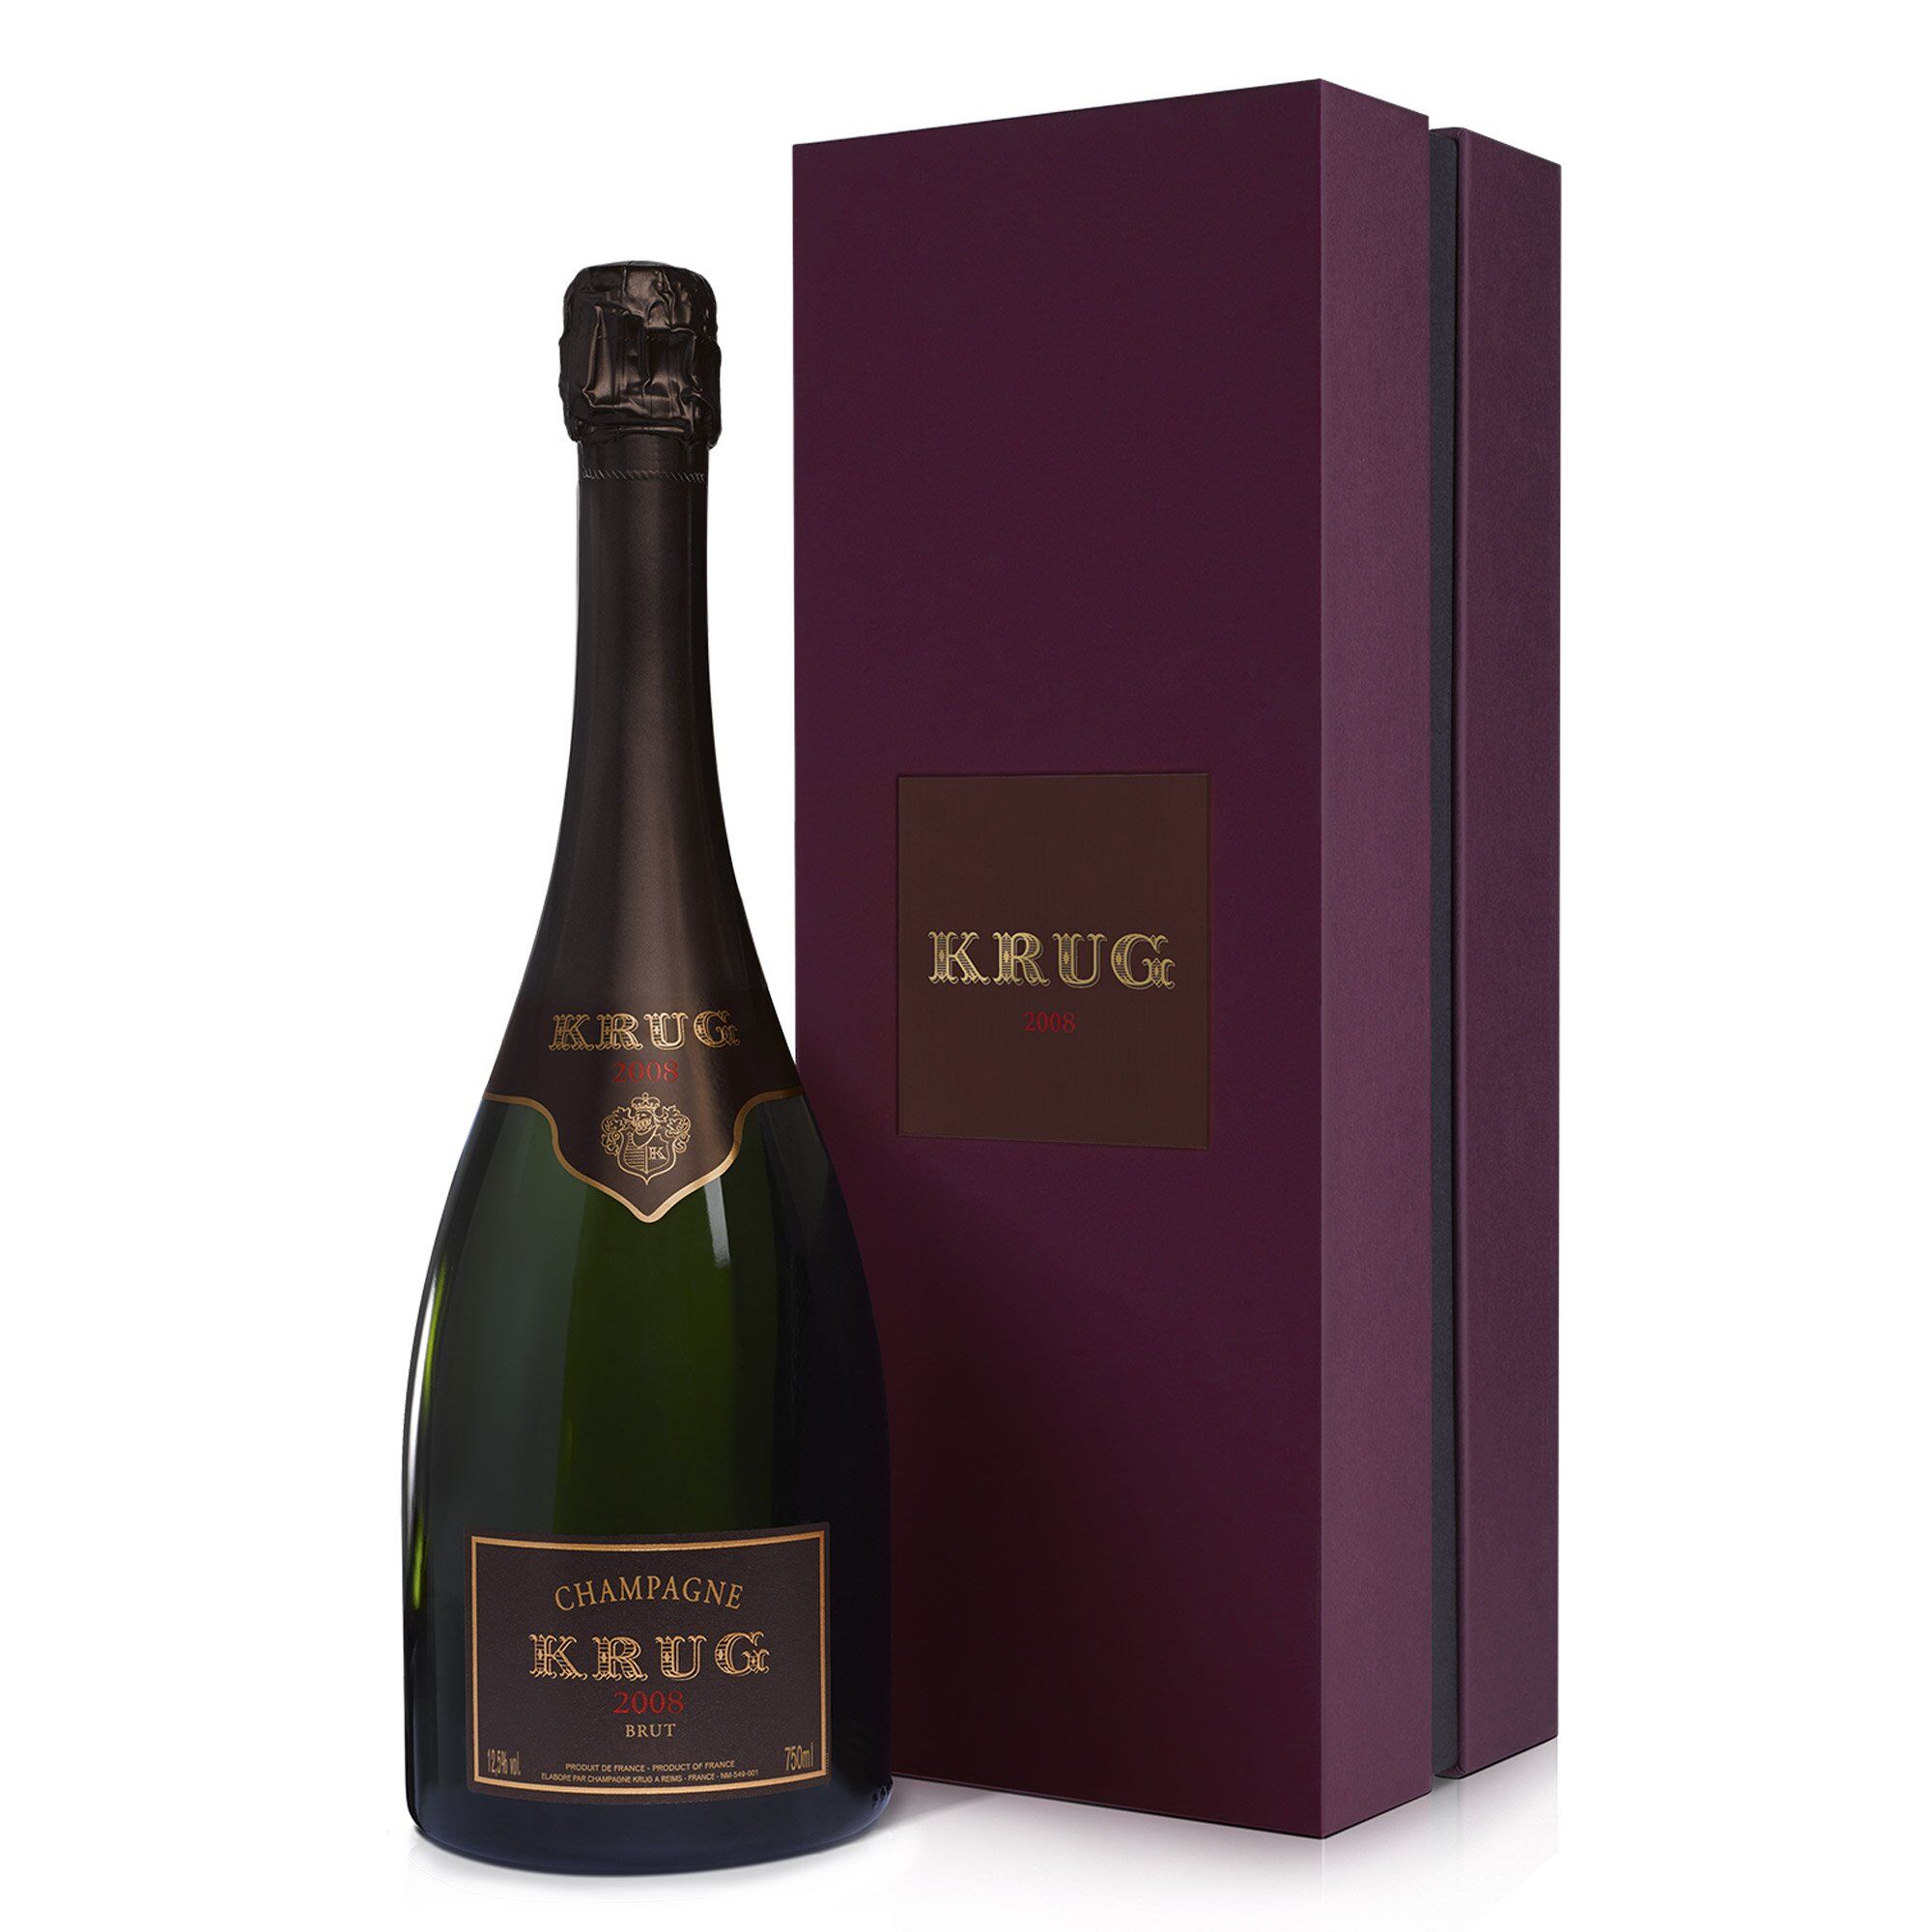 Krug Champagne Brut 2008